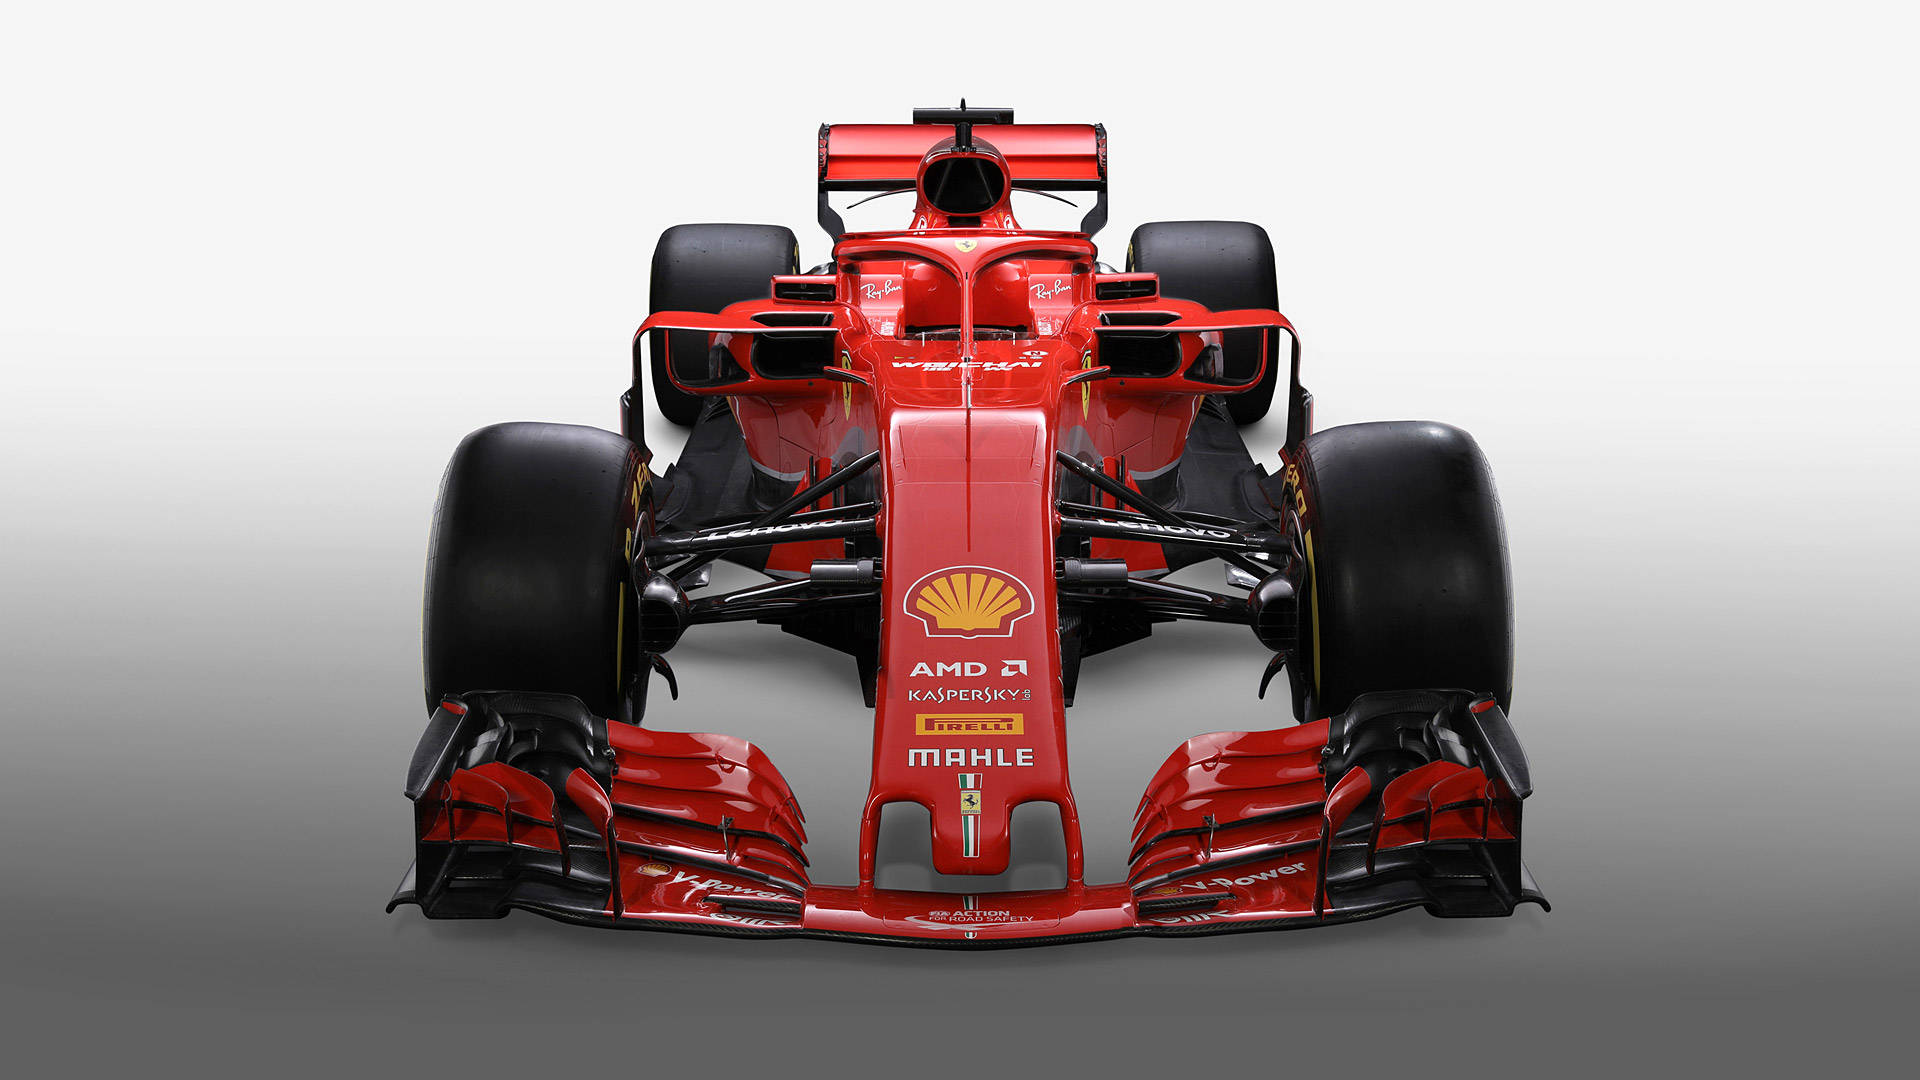 Ferrari F1 2018 Front View Background